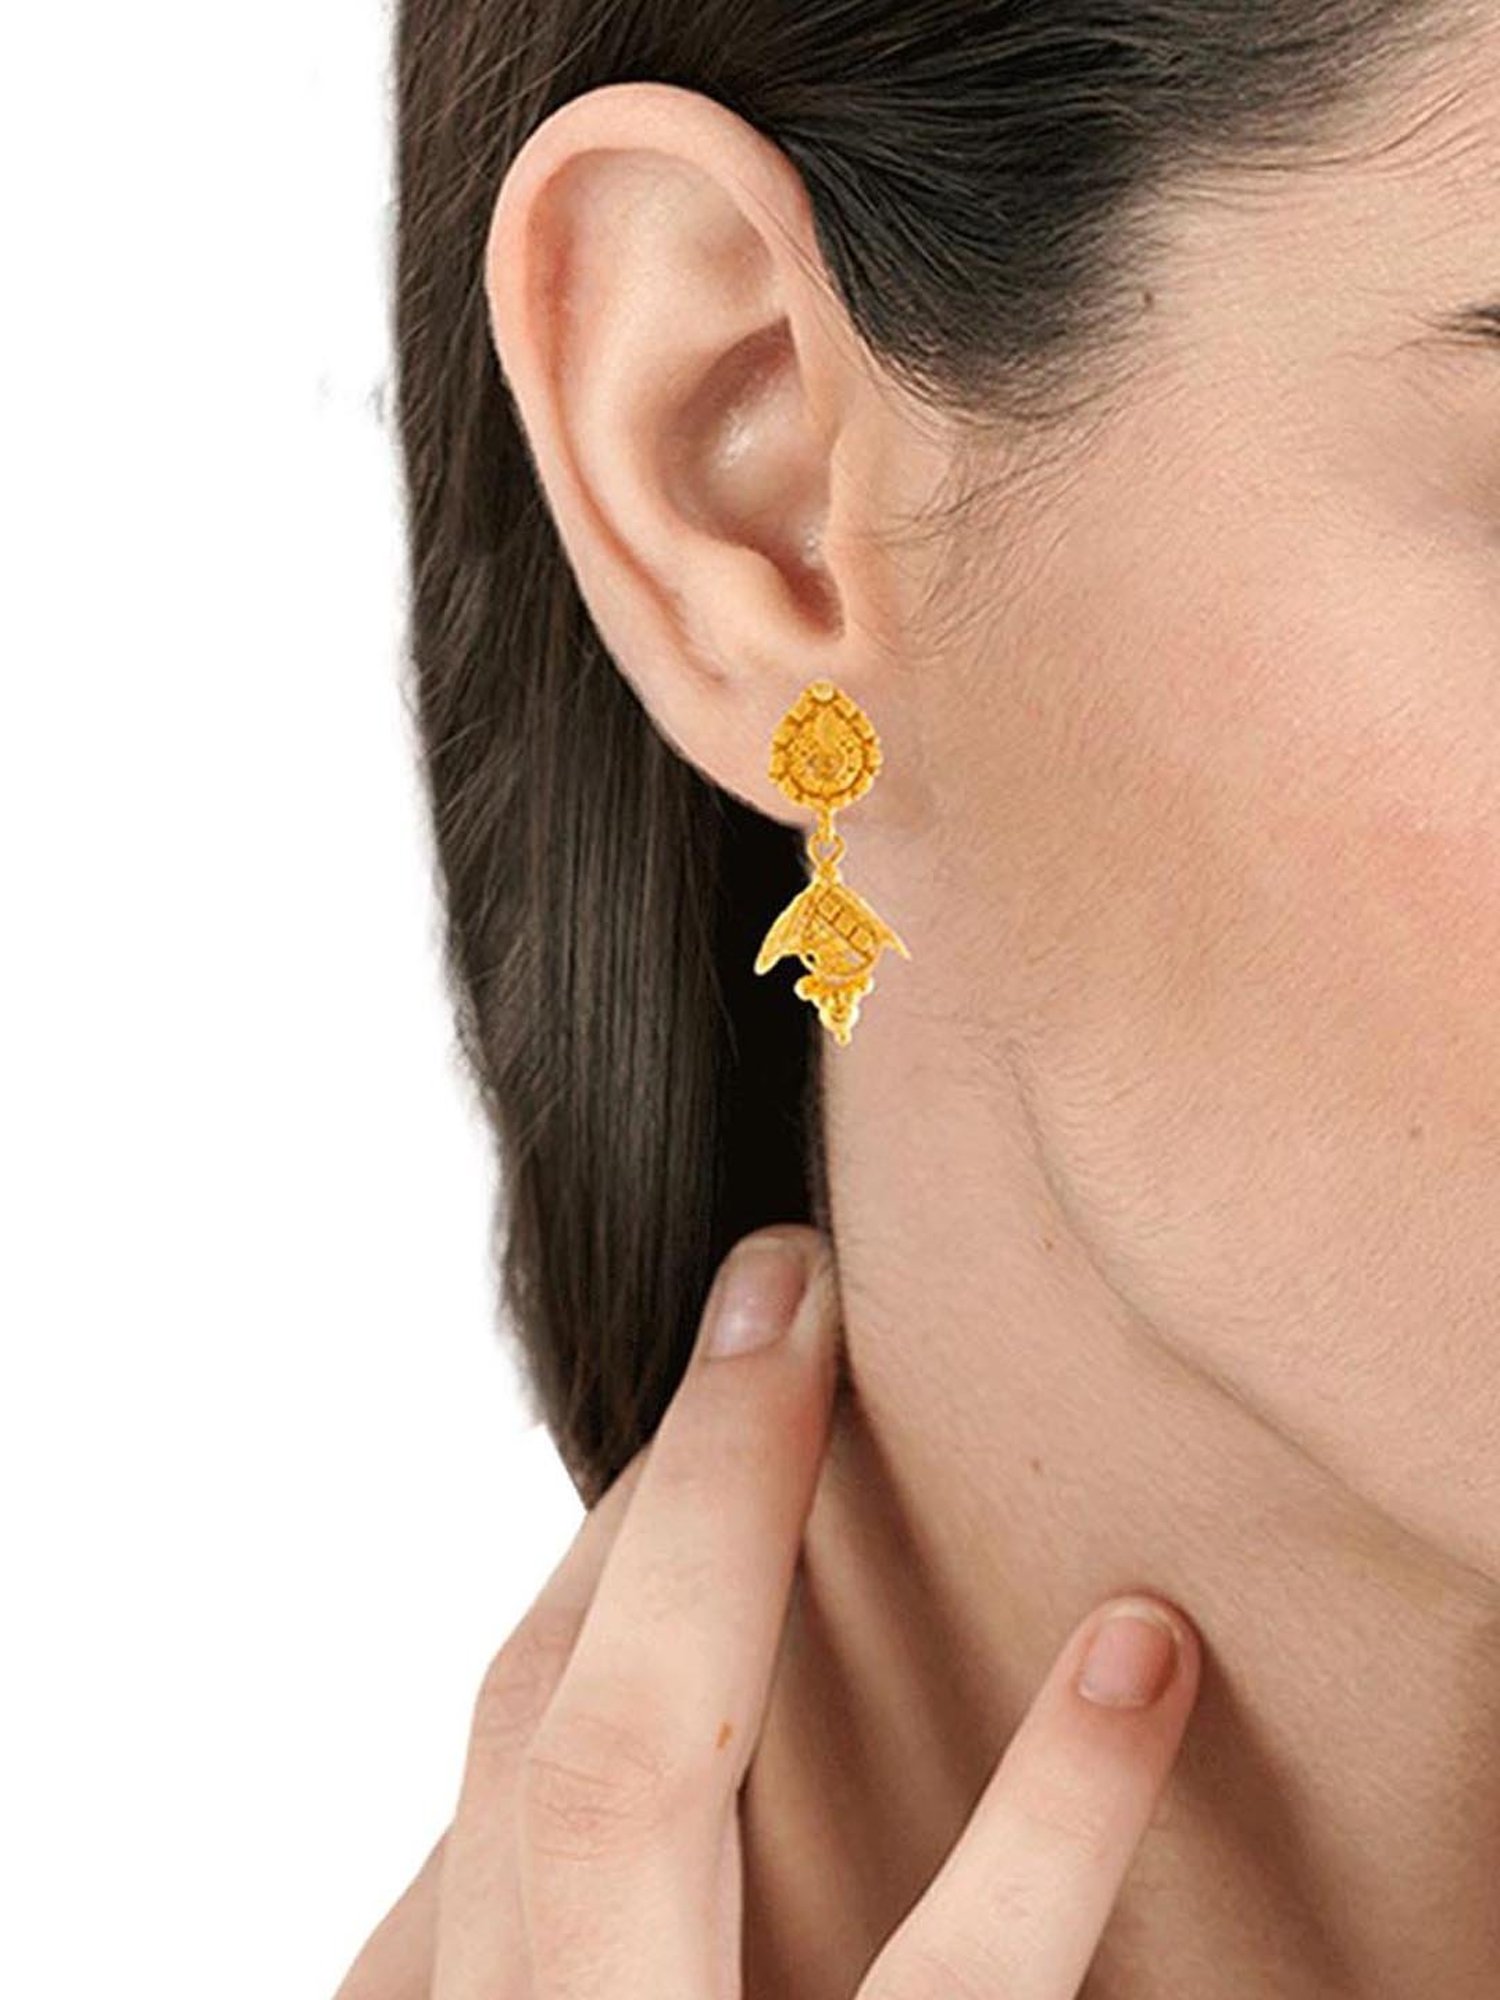 Rhombus Shaped Stud Earrings in Solid Gold - Tales In Gold